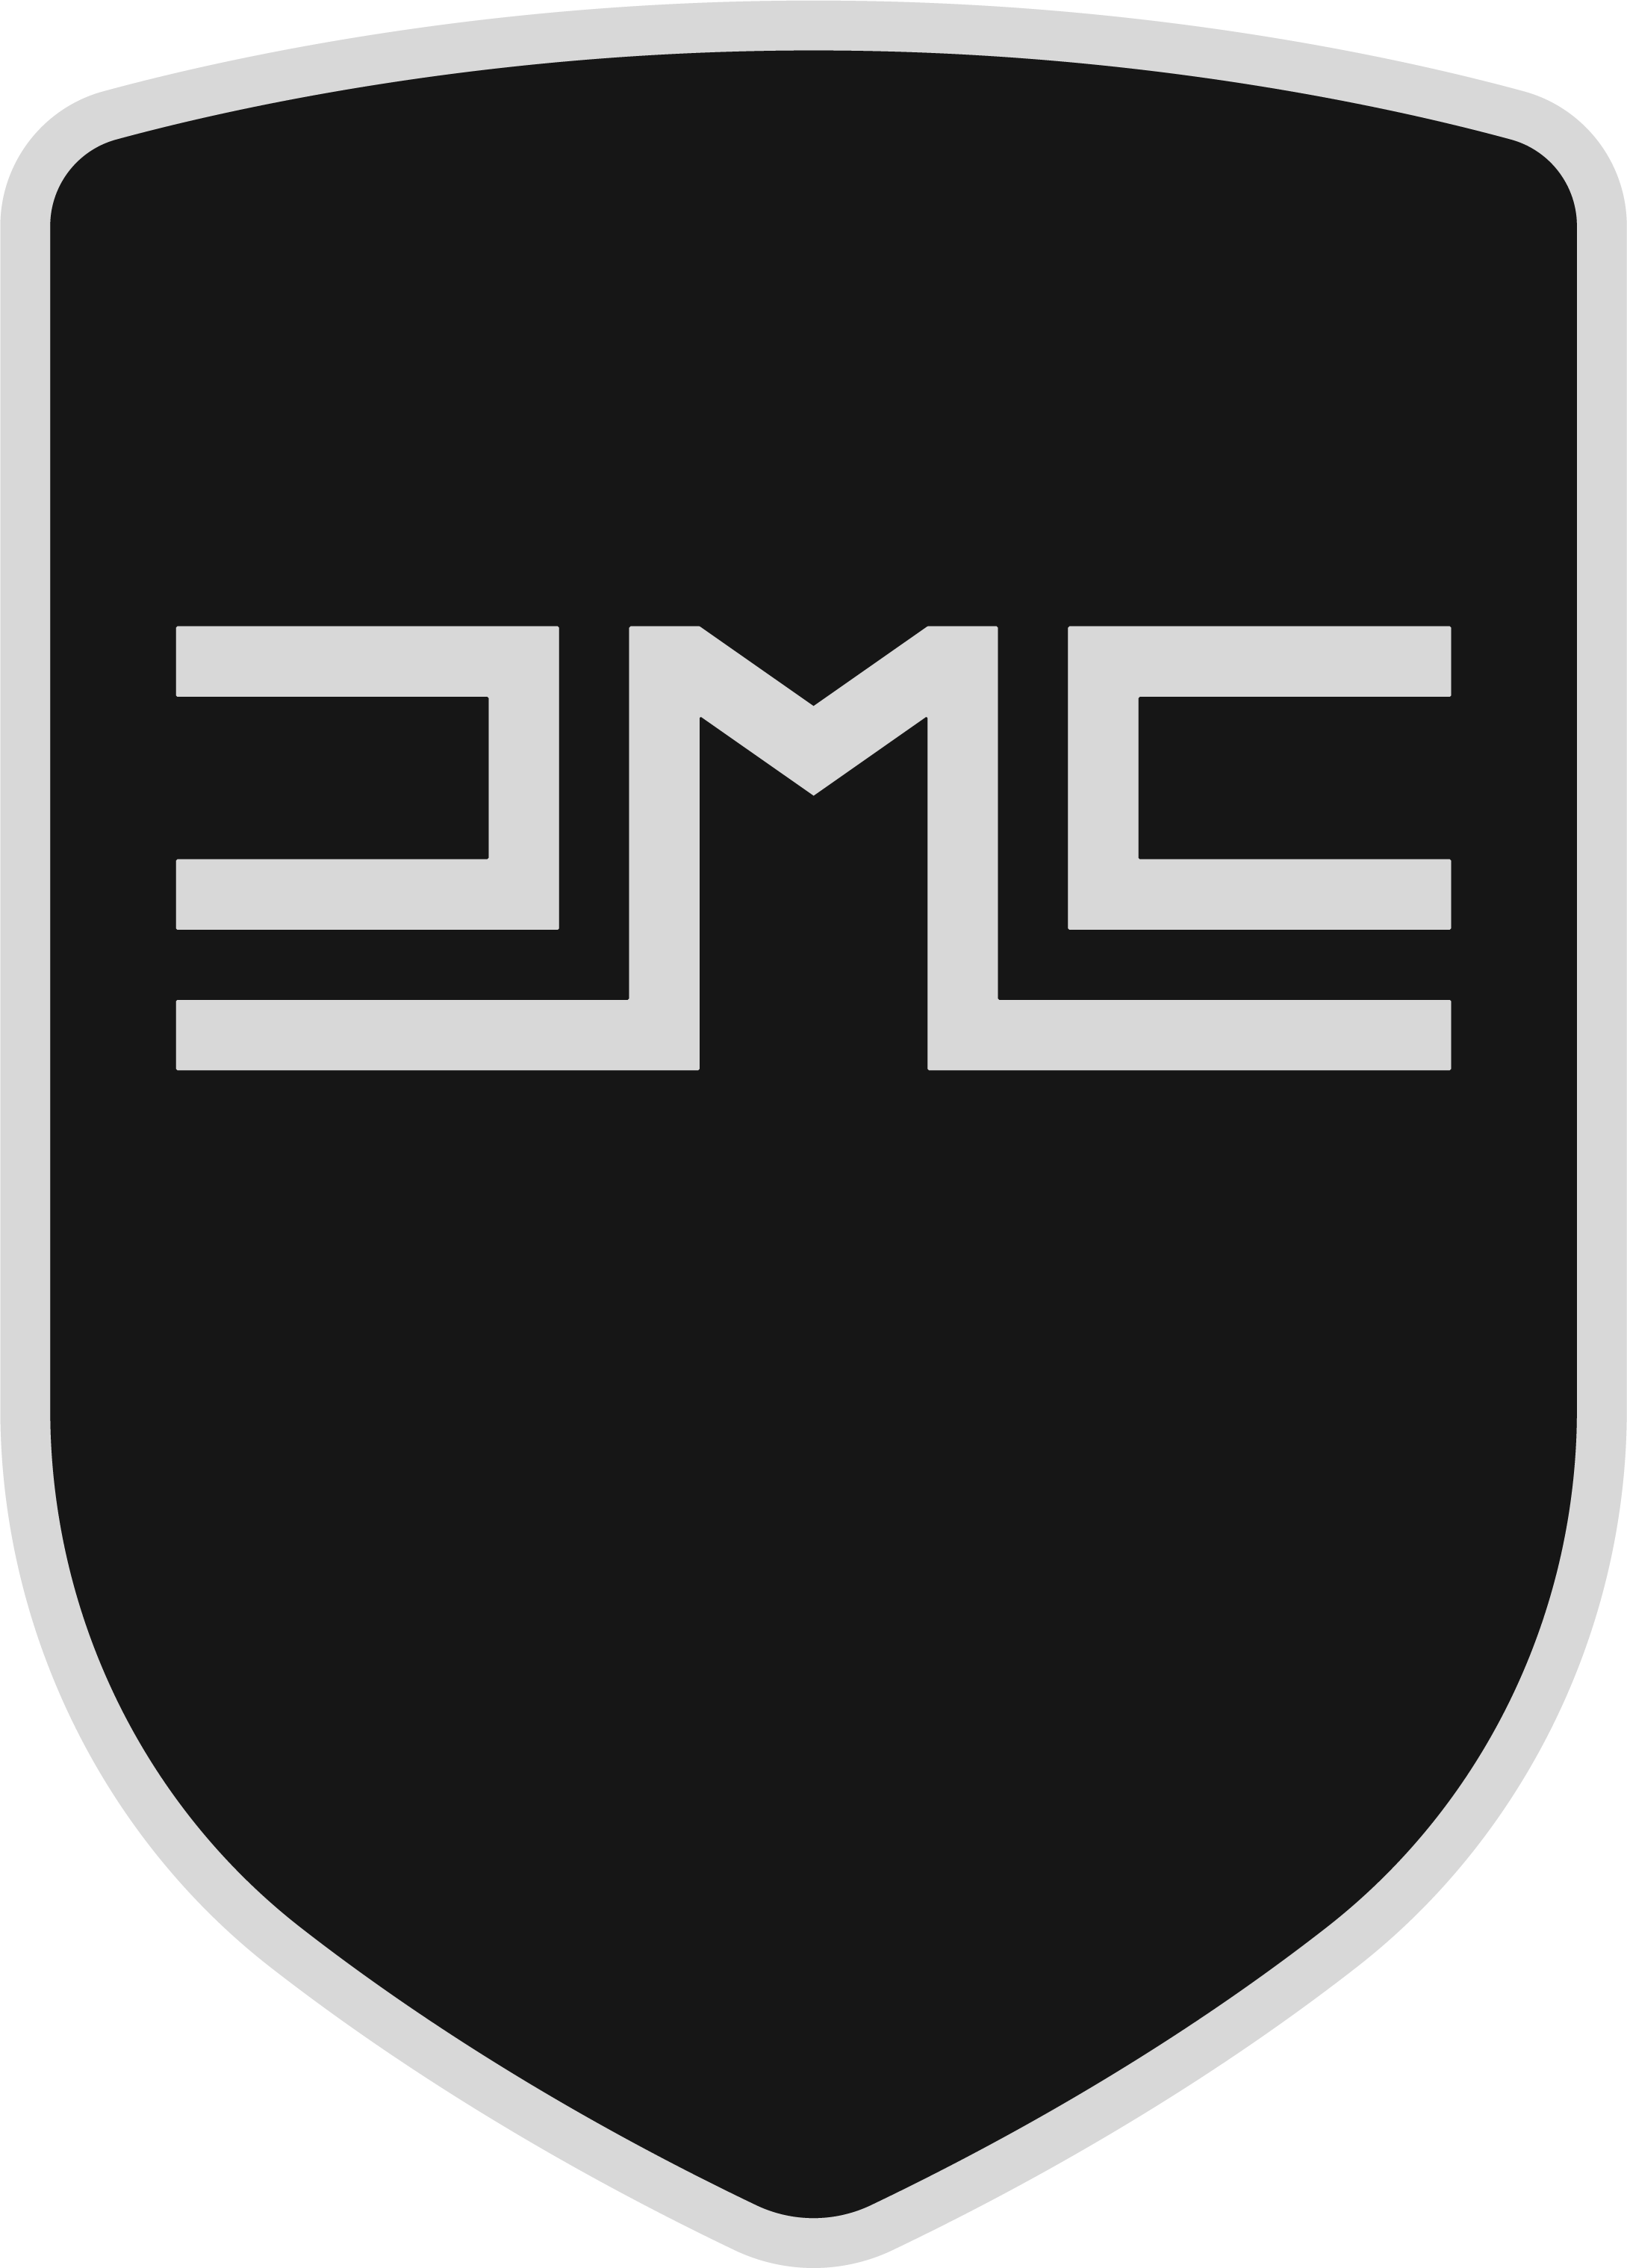 Logo CMC - Autoviemme